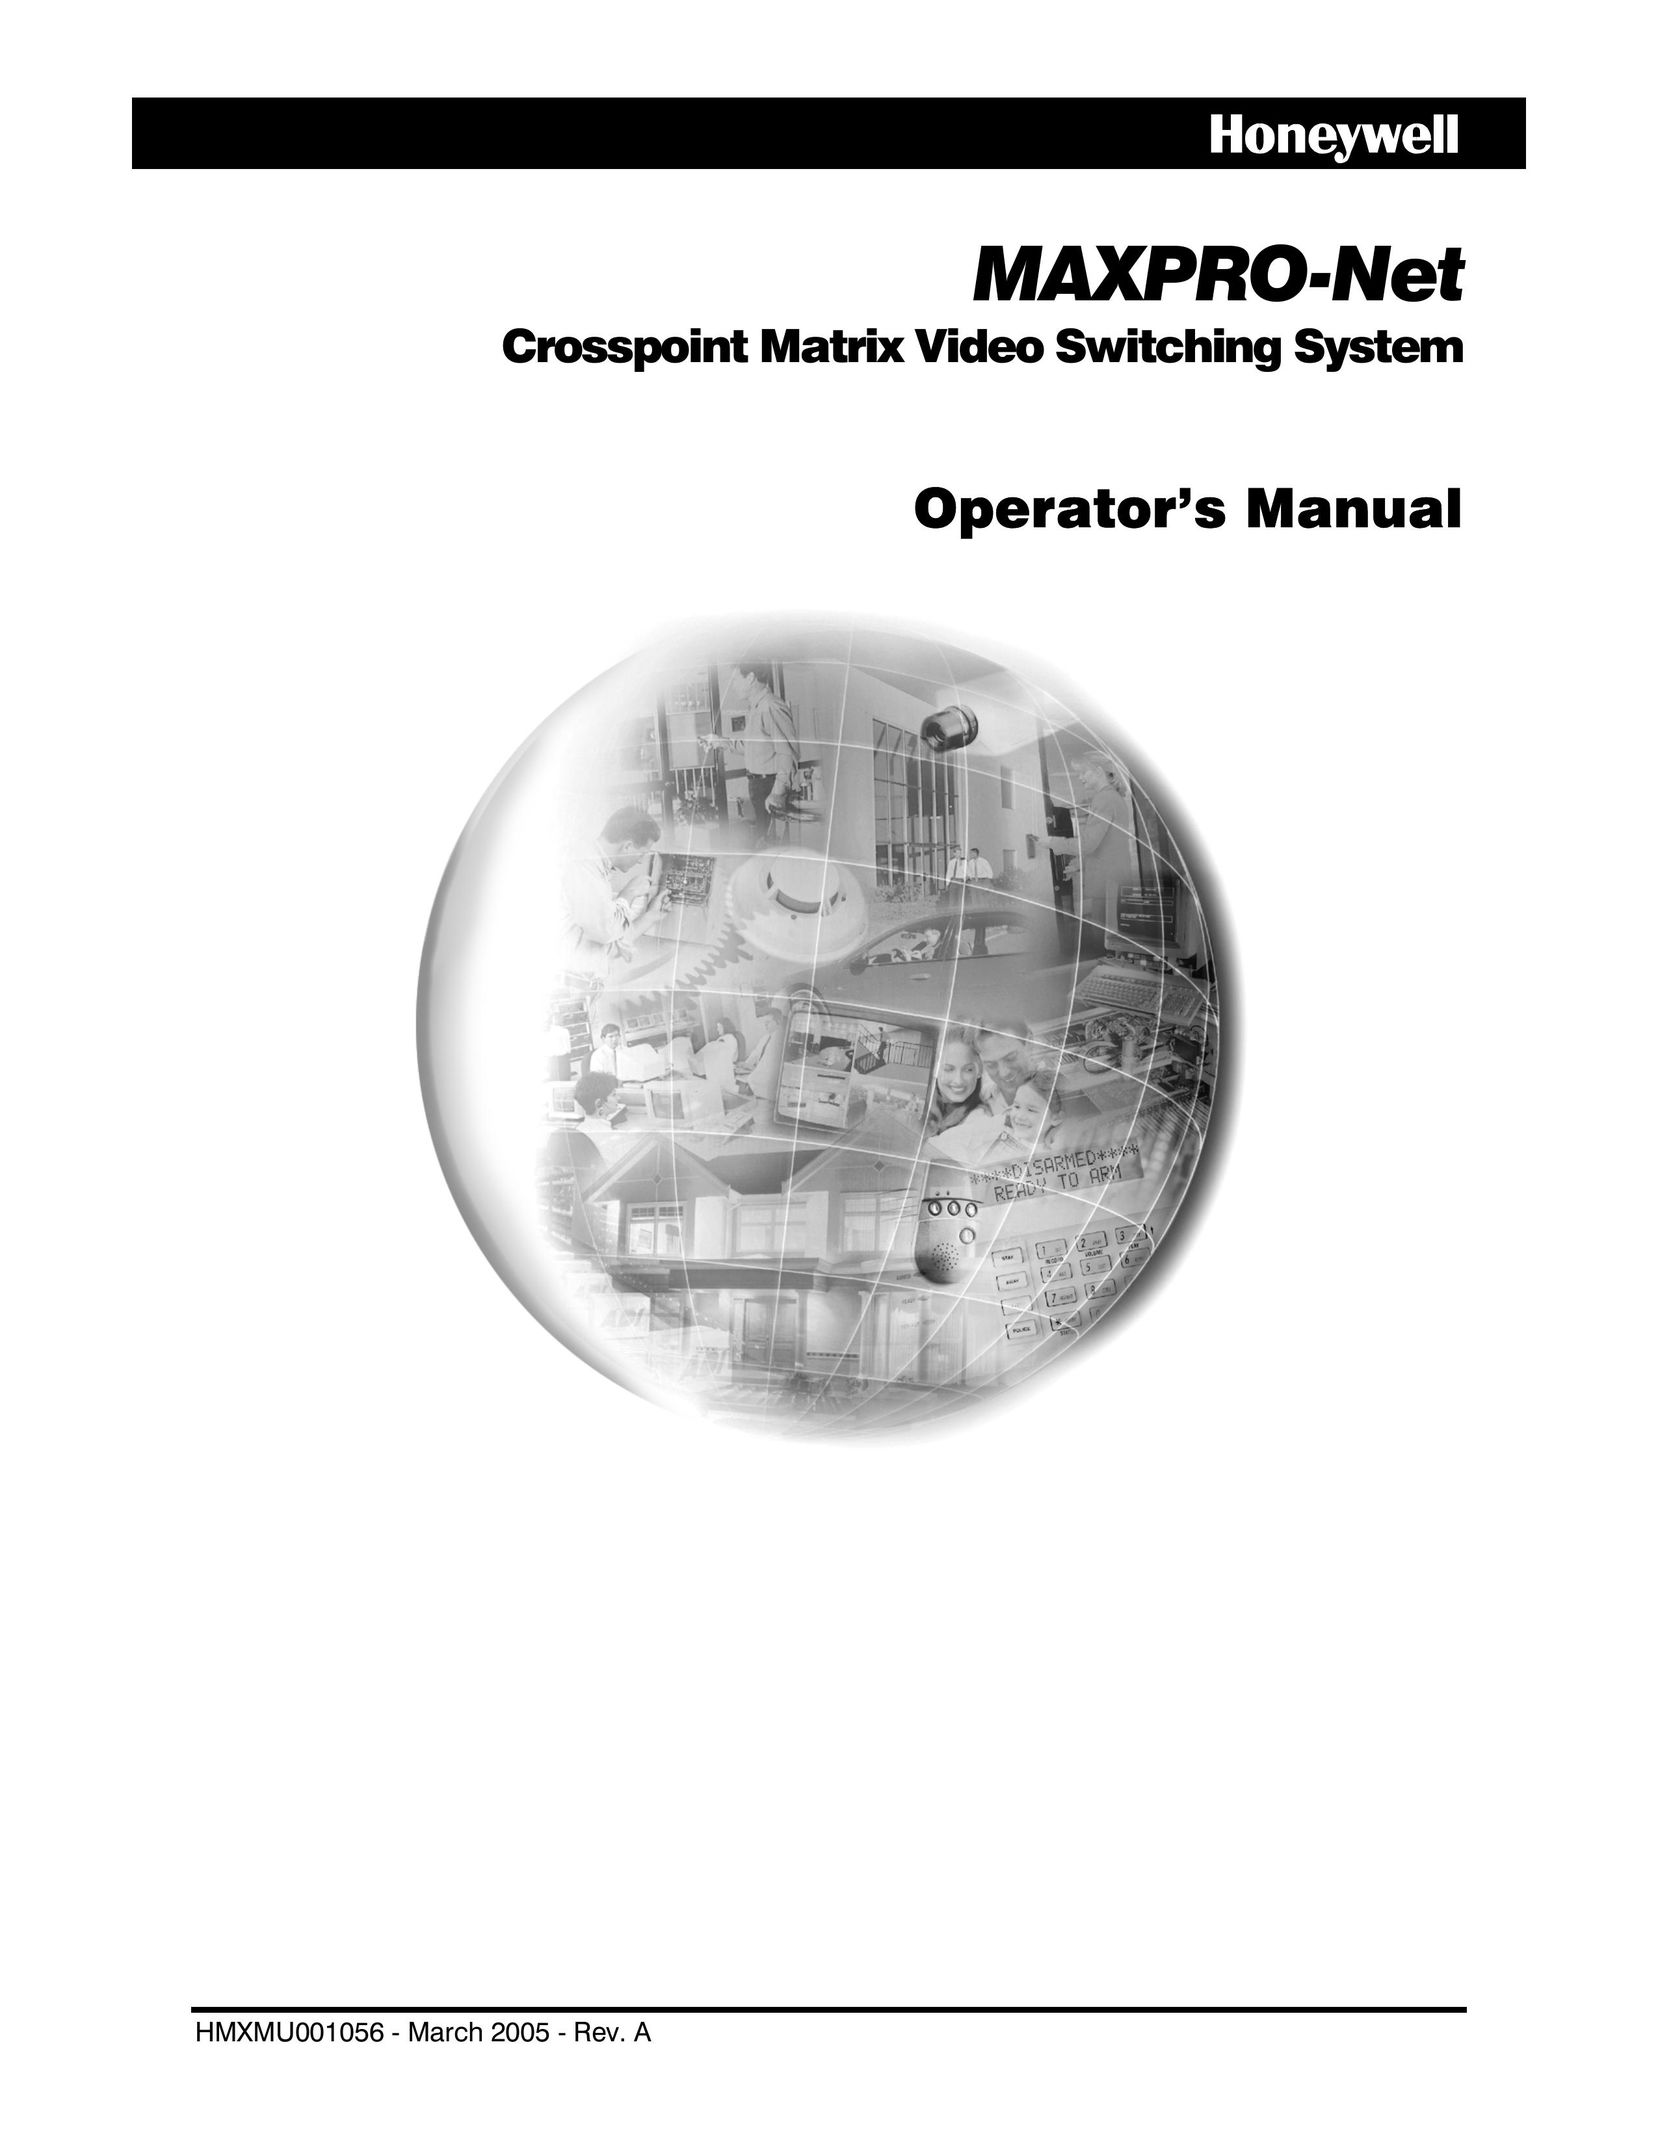 Honeywell MAXPRO-NET Switch User Manual